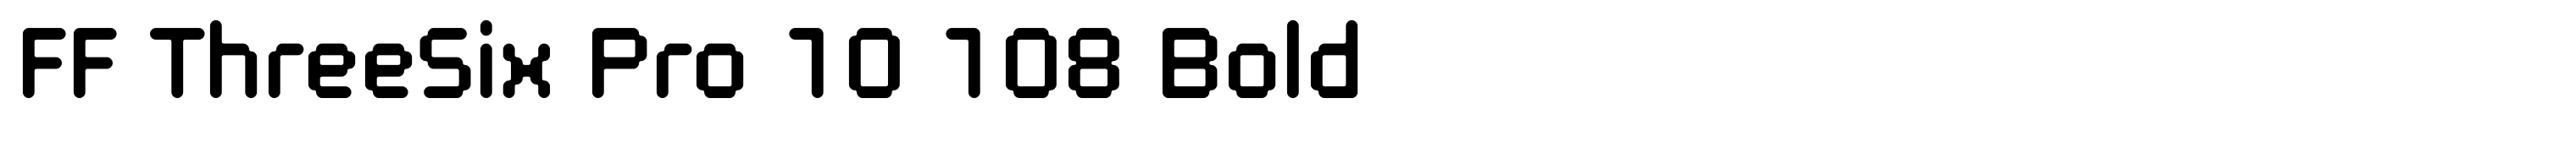 FF ThreeSix Pro 10 108 Bold